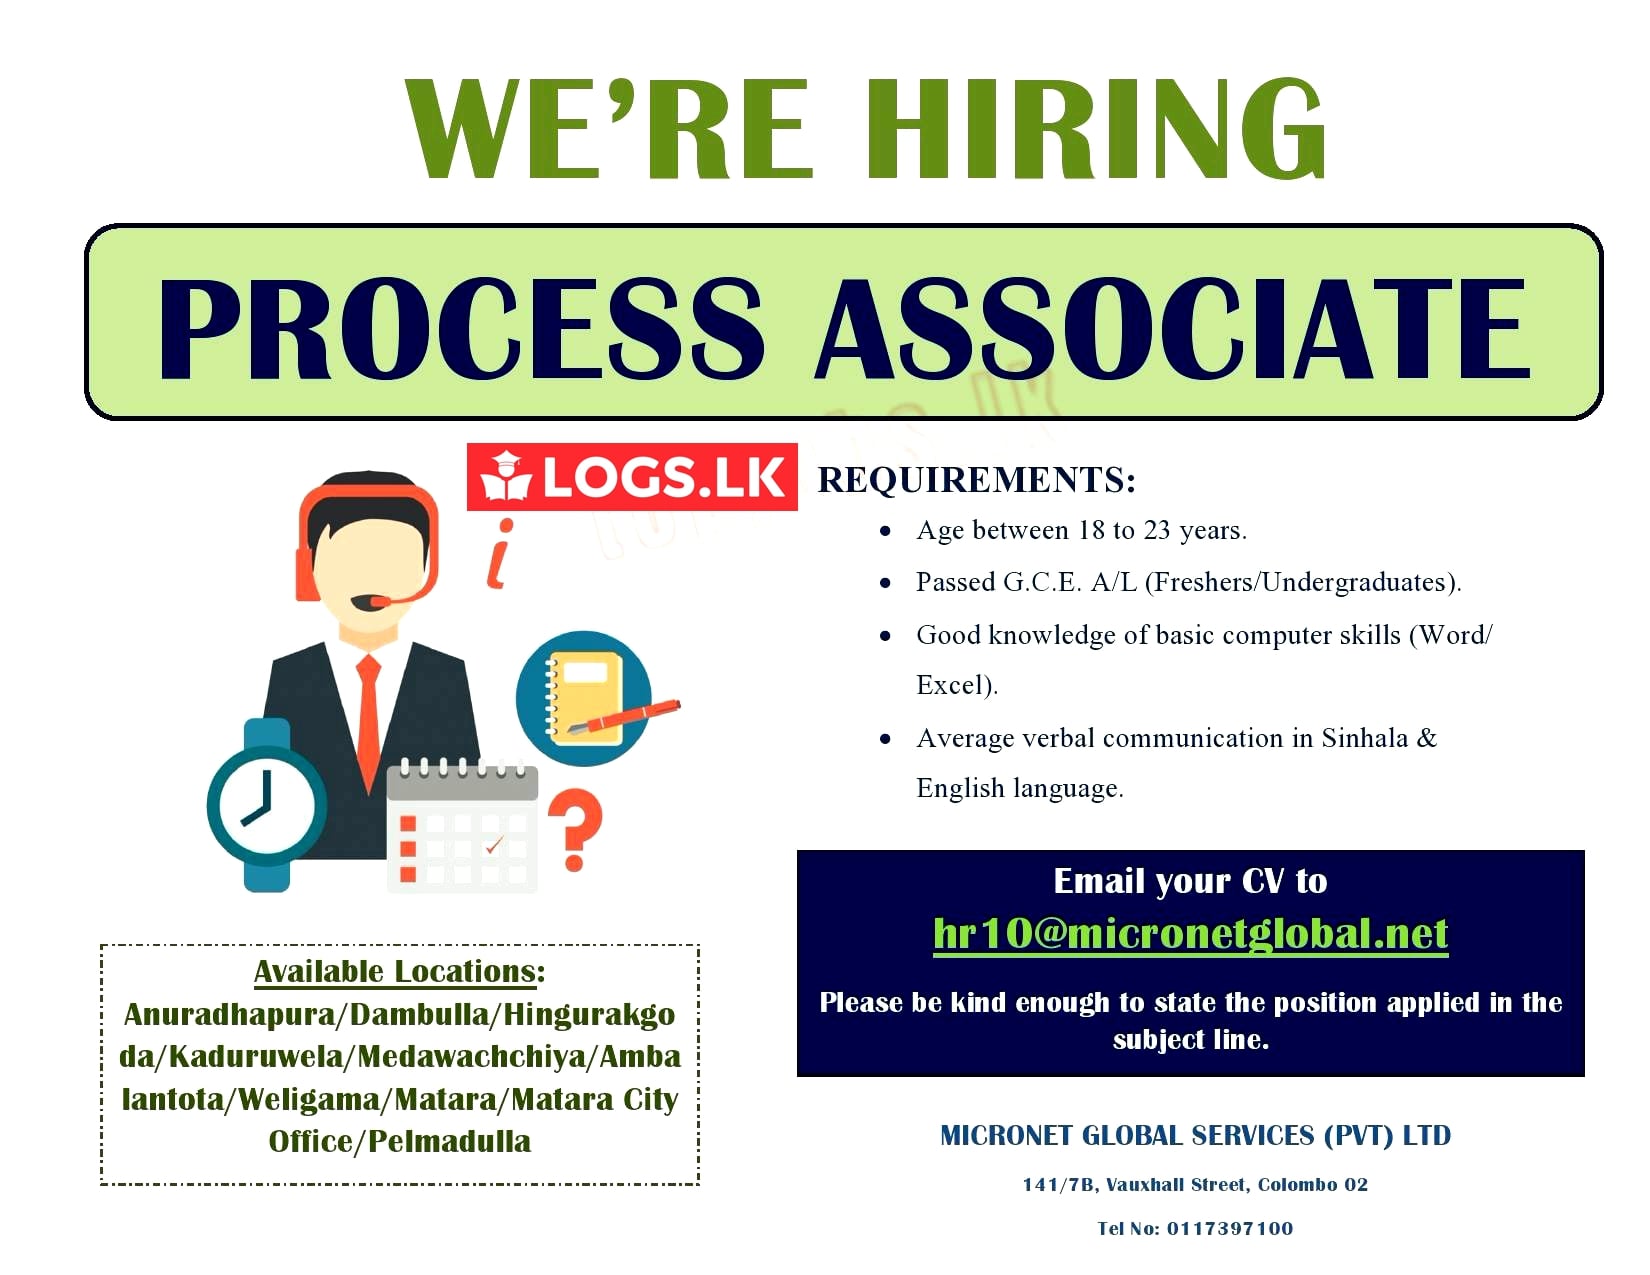 Process Associate Job Vacancy - Micronet Global Services Jobs Vacancies